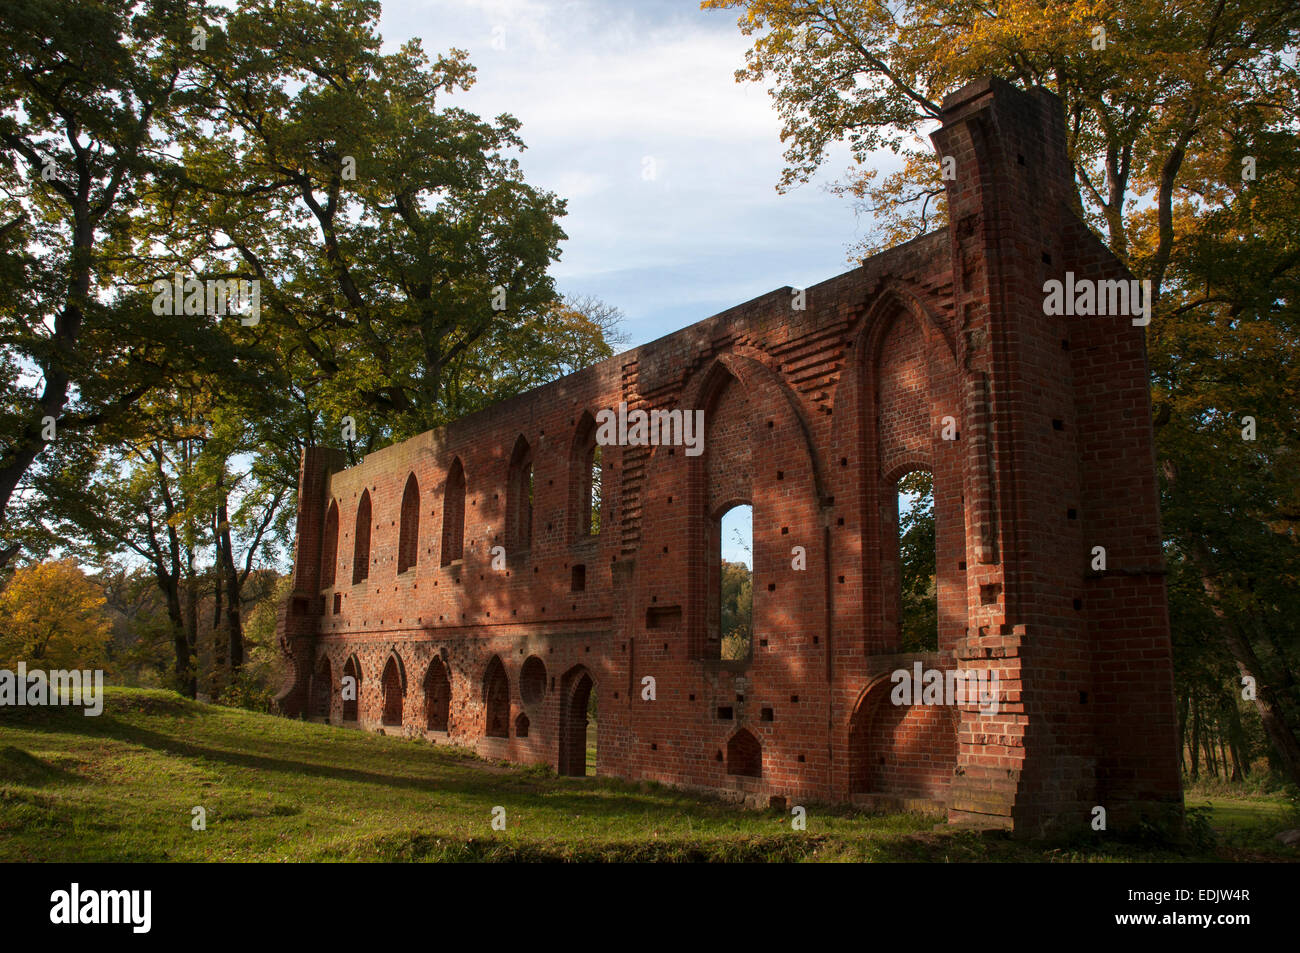 Built in 1230 the Cistercian's monastery Marienpforte was destroyed in the Thirty Years' War. Now it is a ruin near Boitzenburg. Stock Photo